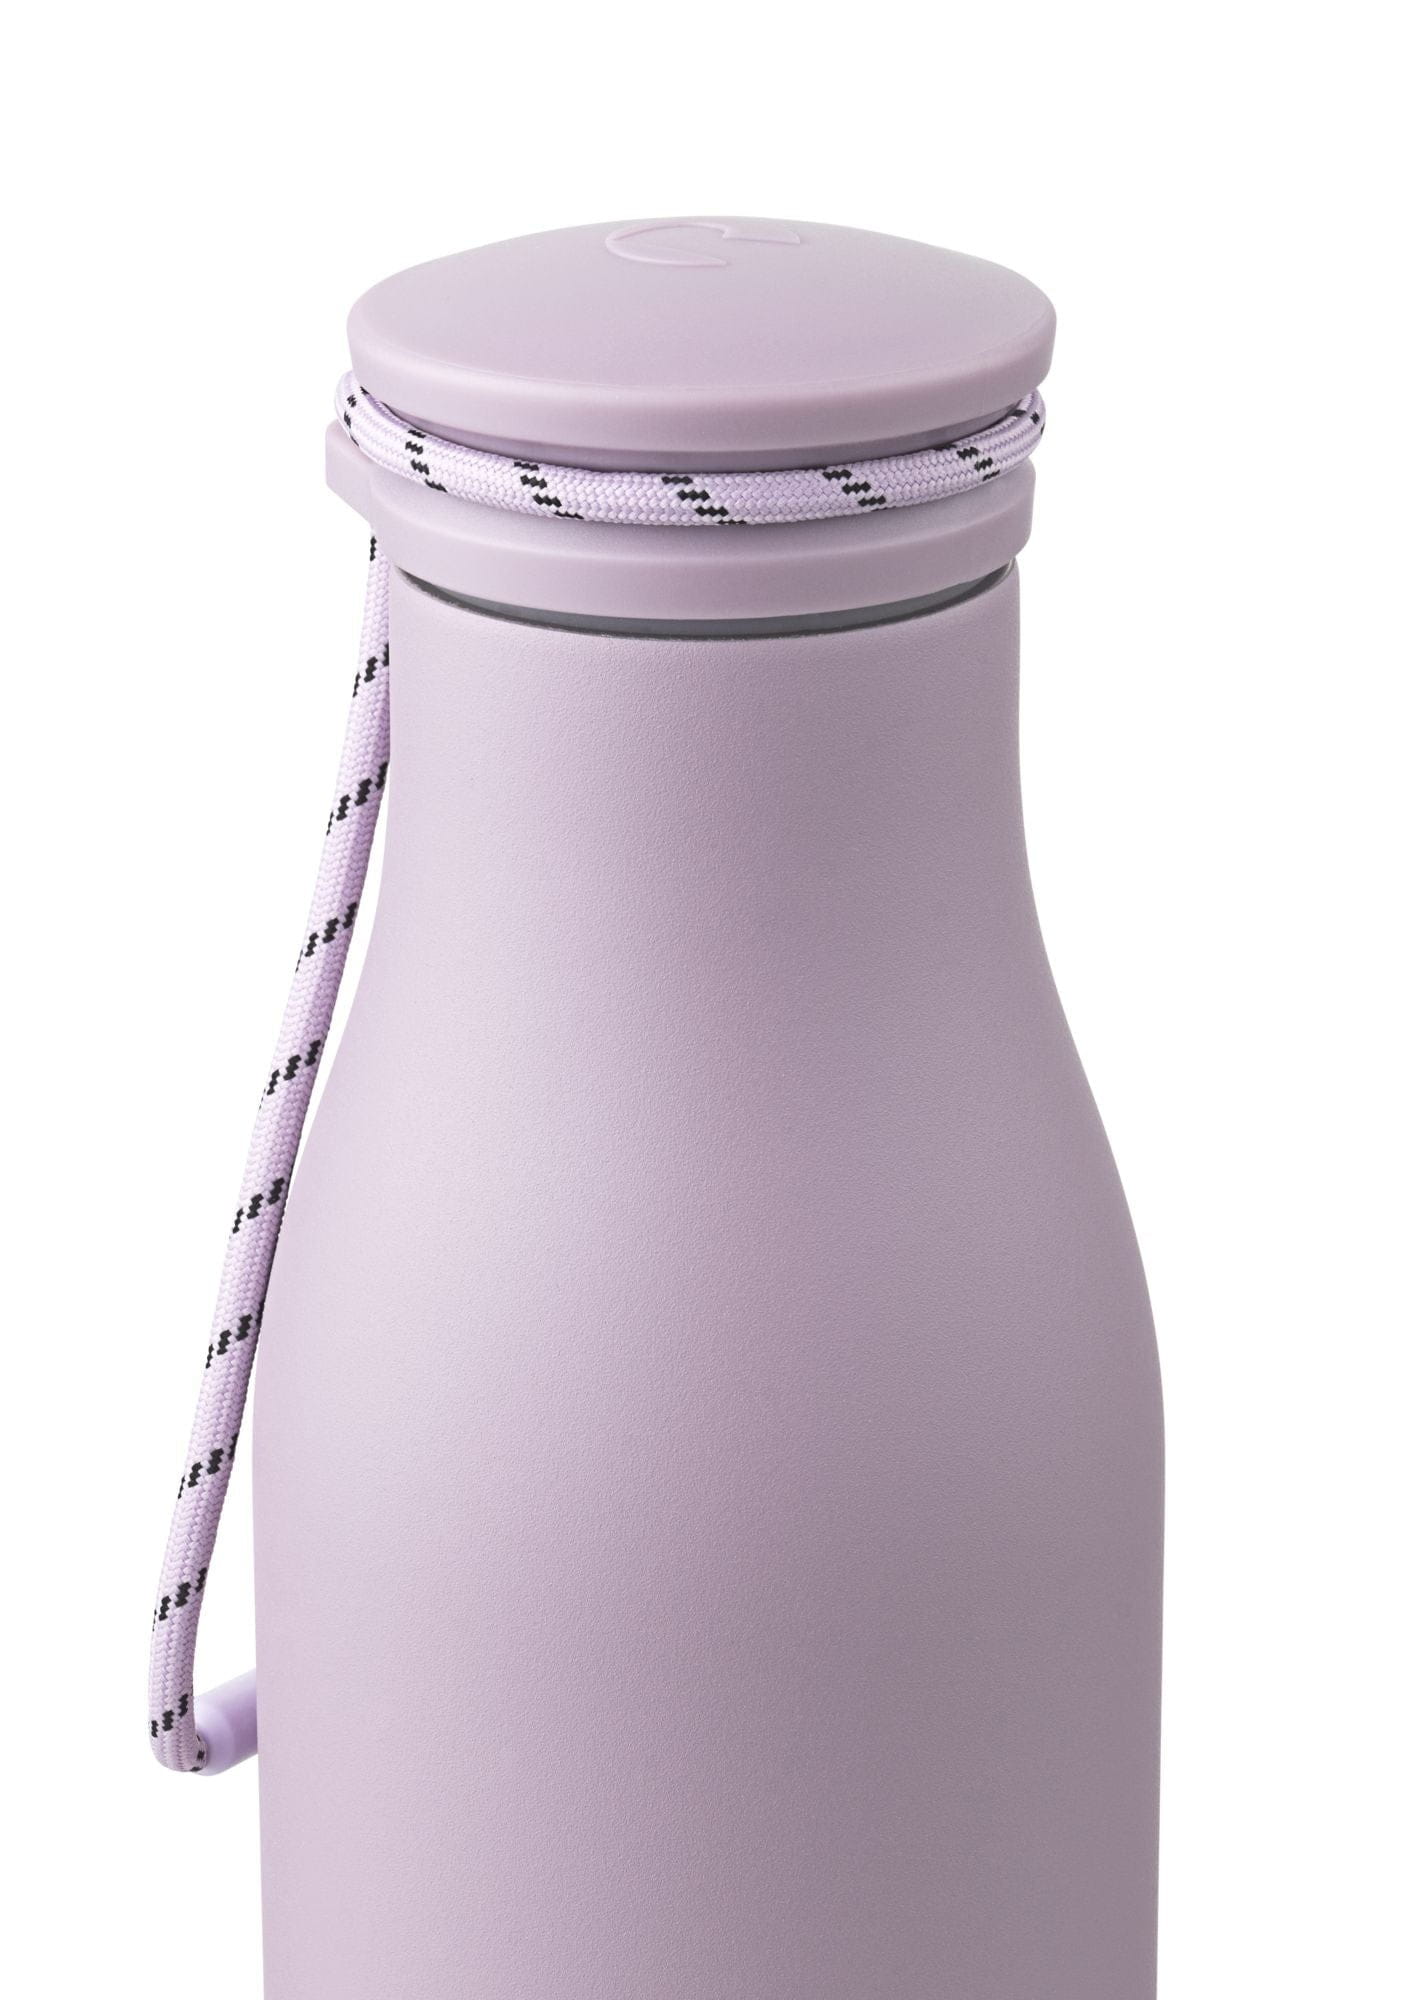 Rosendahl GC Outdoor Thermos Water Flasche 500 ml, lila